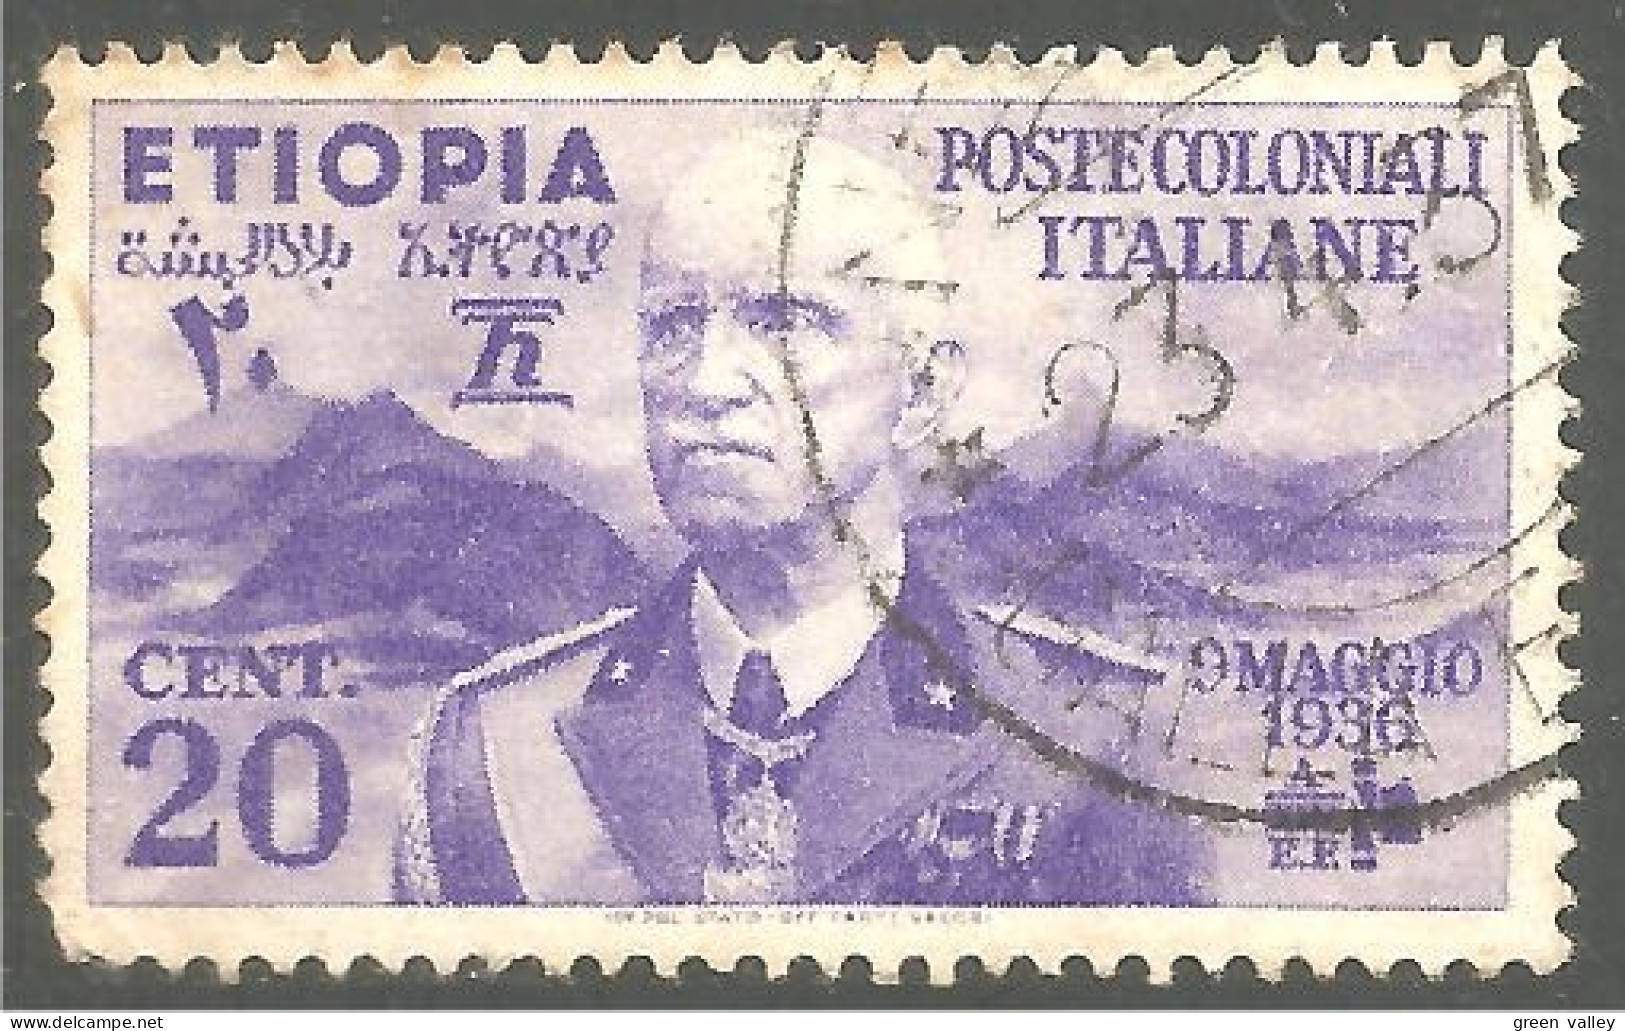 521 Poste Coloniali Italiane Etiopia 1936 Victor Emmanuel III (ITC-155b) - Etiopia